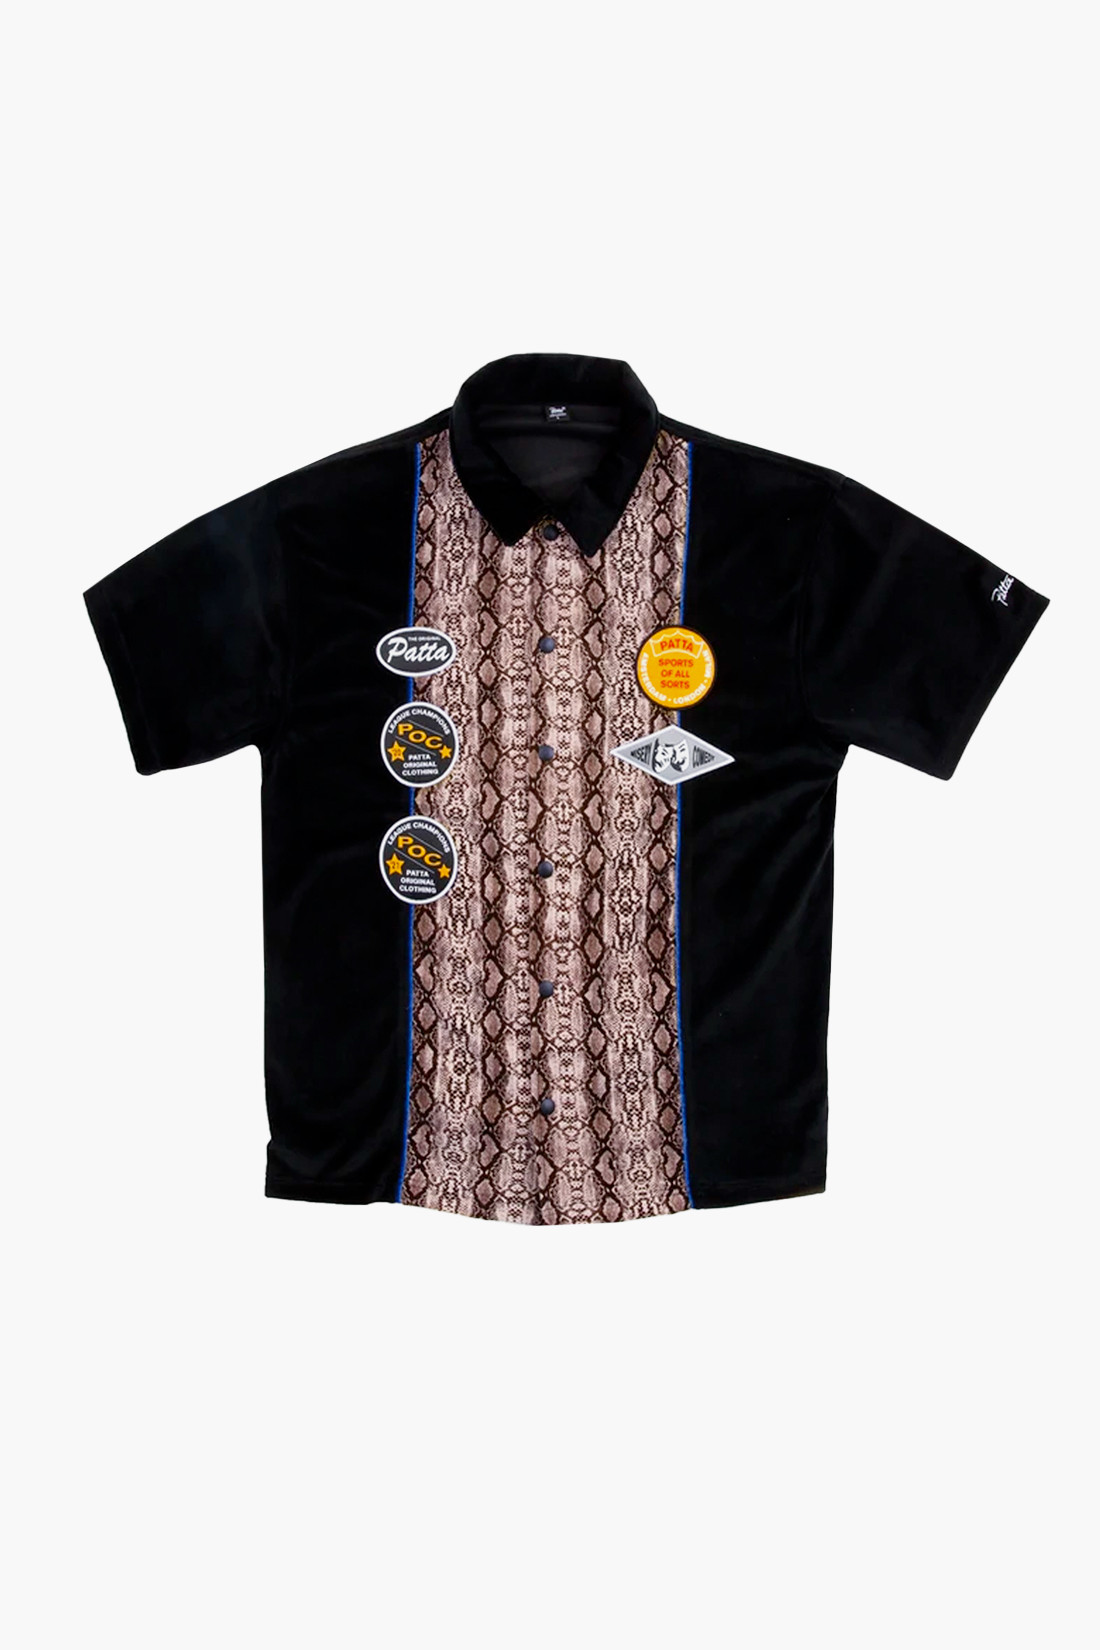 Patta velour bowling shirt Black/snakeskin